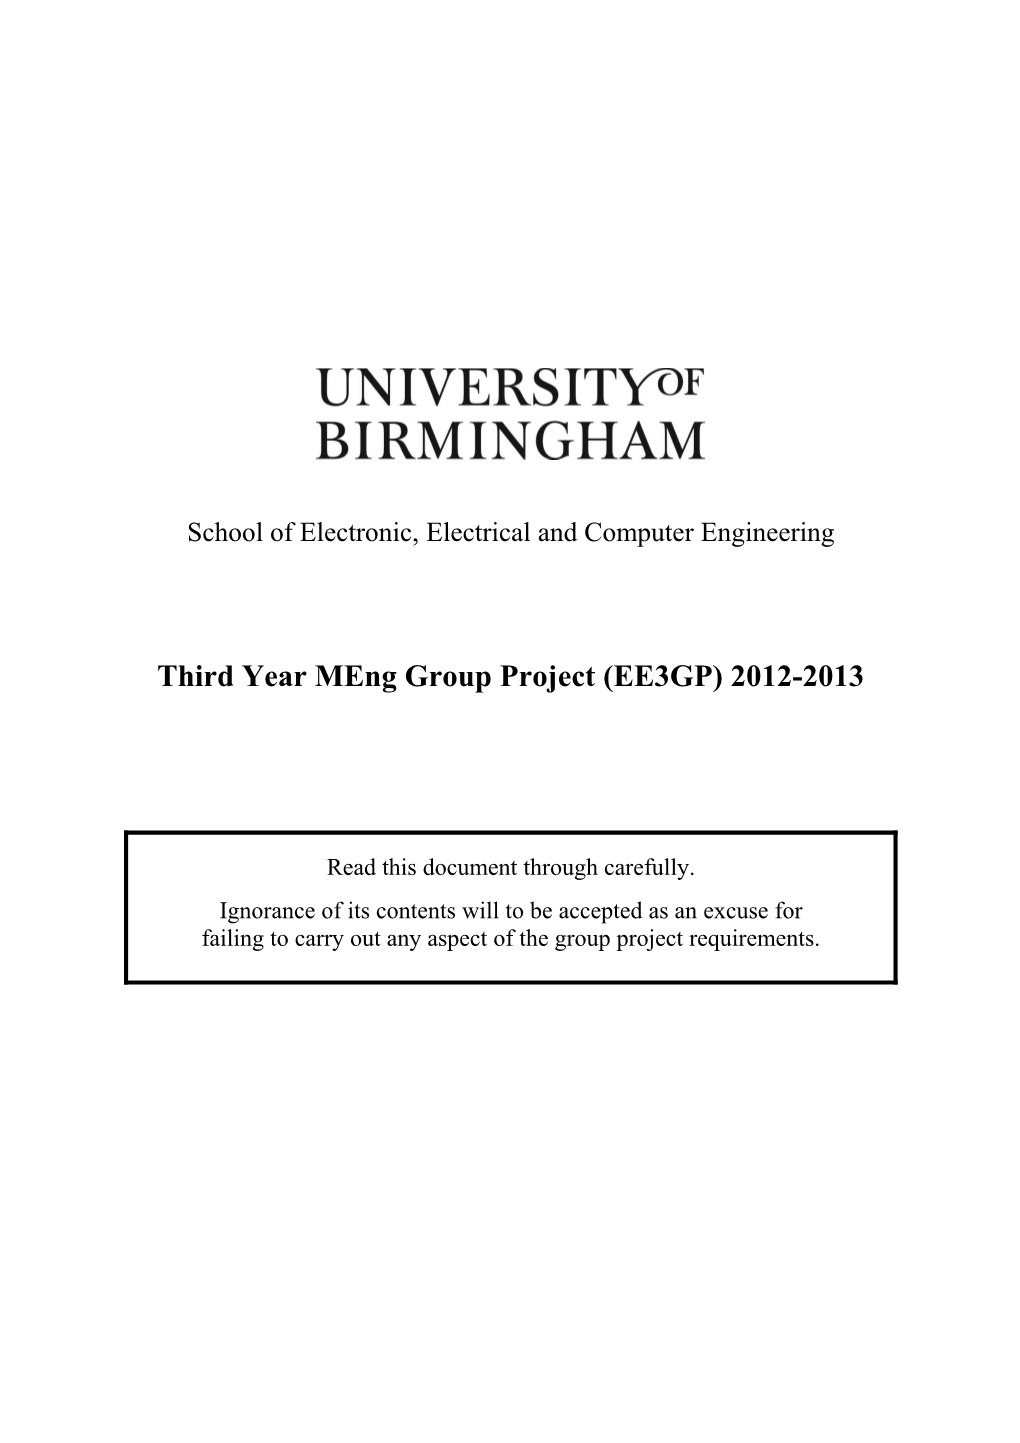 Group Design Study (EEM3GP) 1999/2000